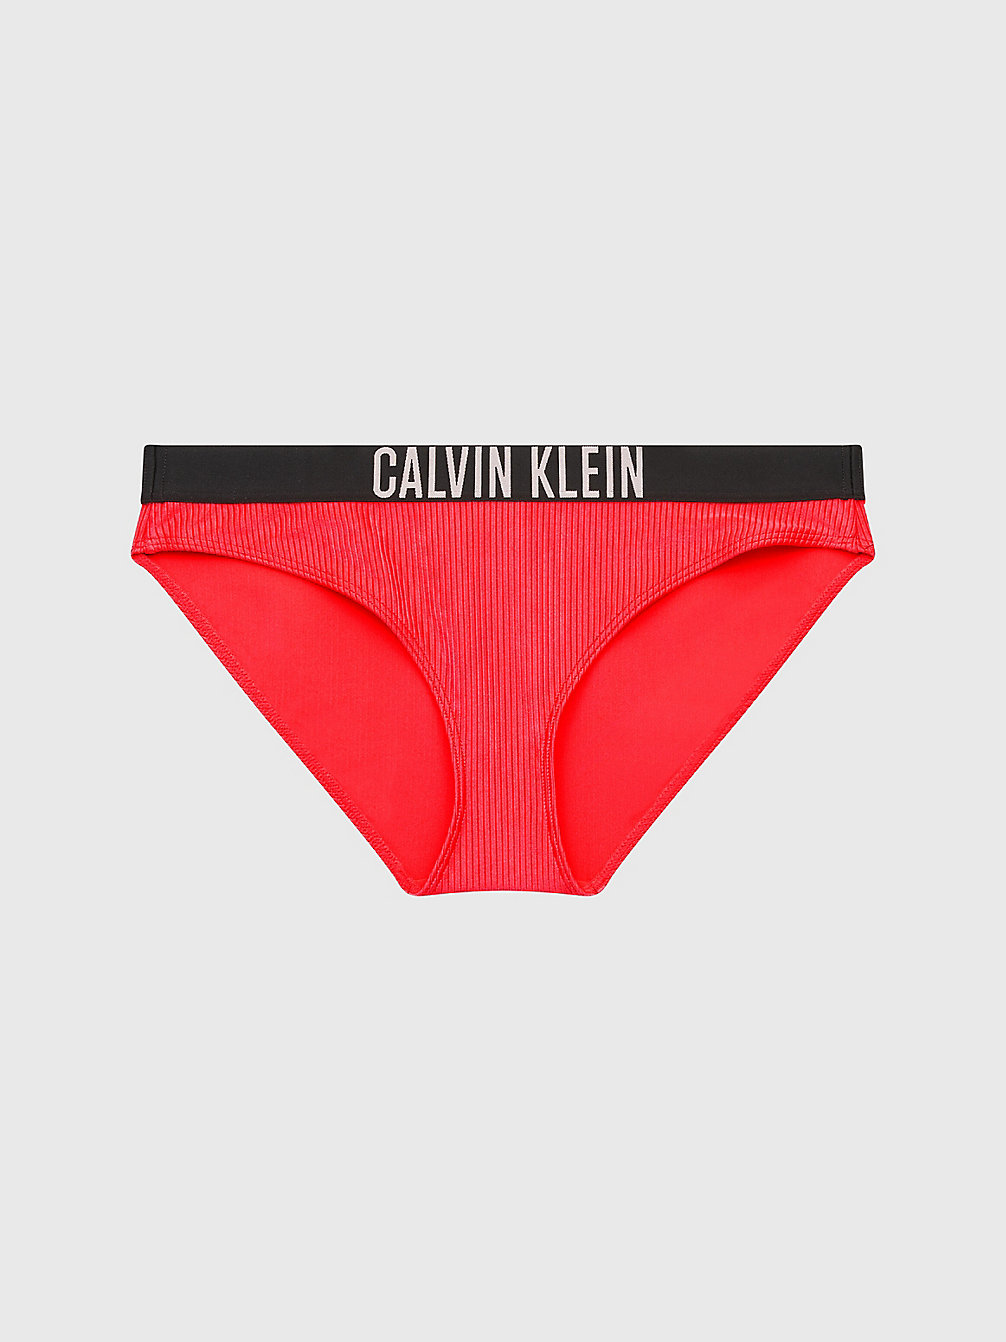 CORAL CRUSH Bikinihose - Intense Power undefined Damen Calvin Klein